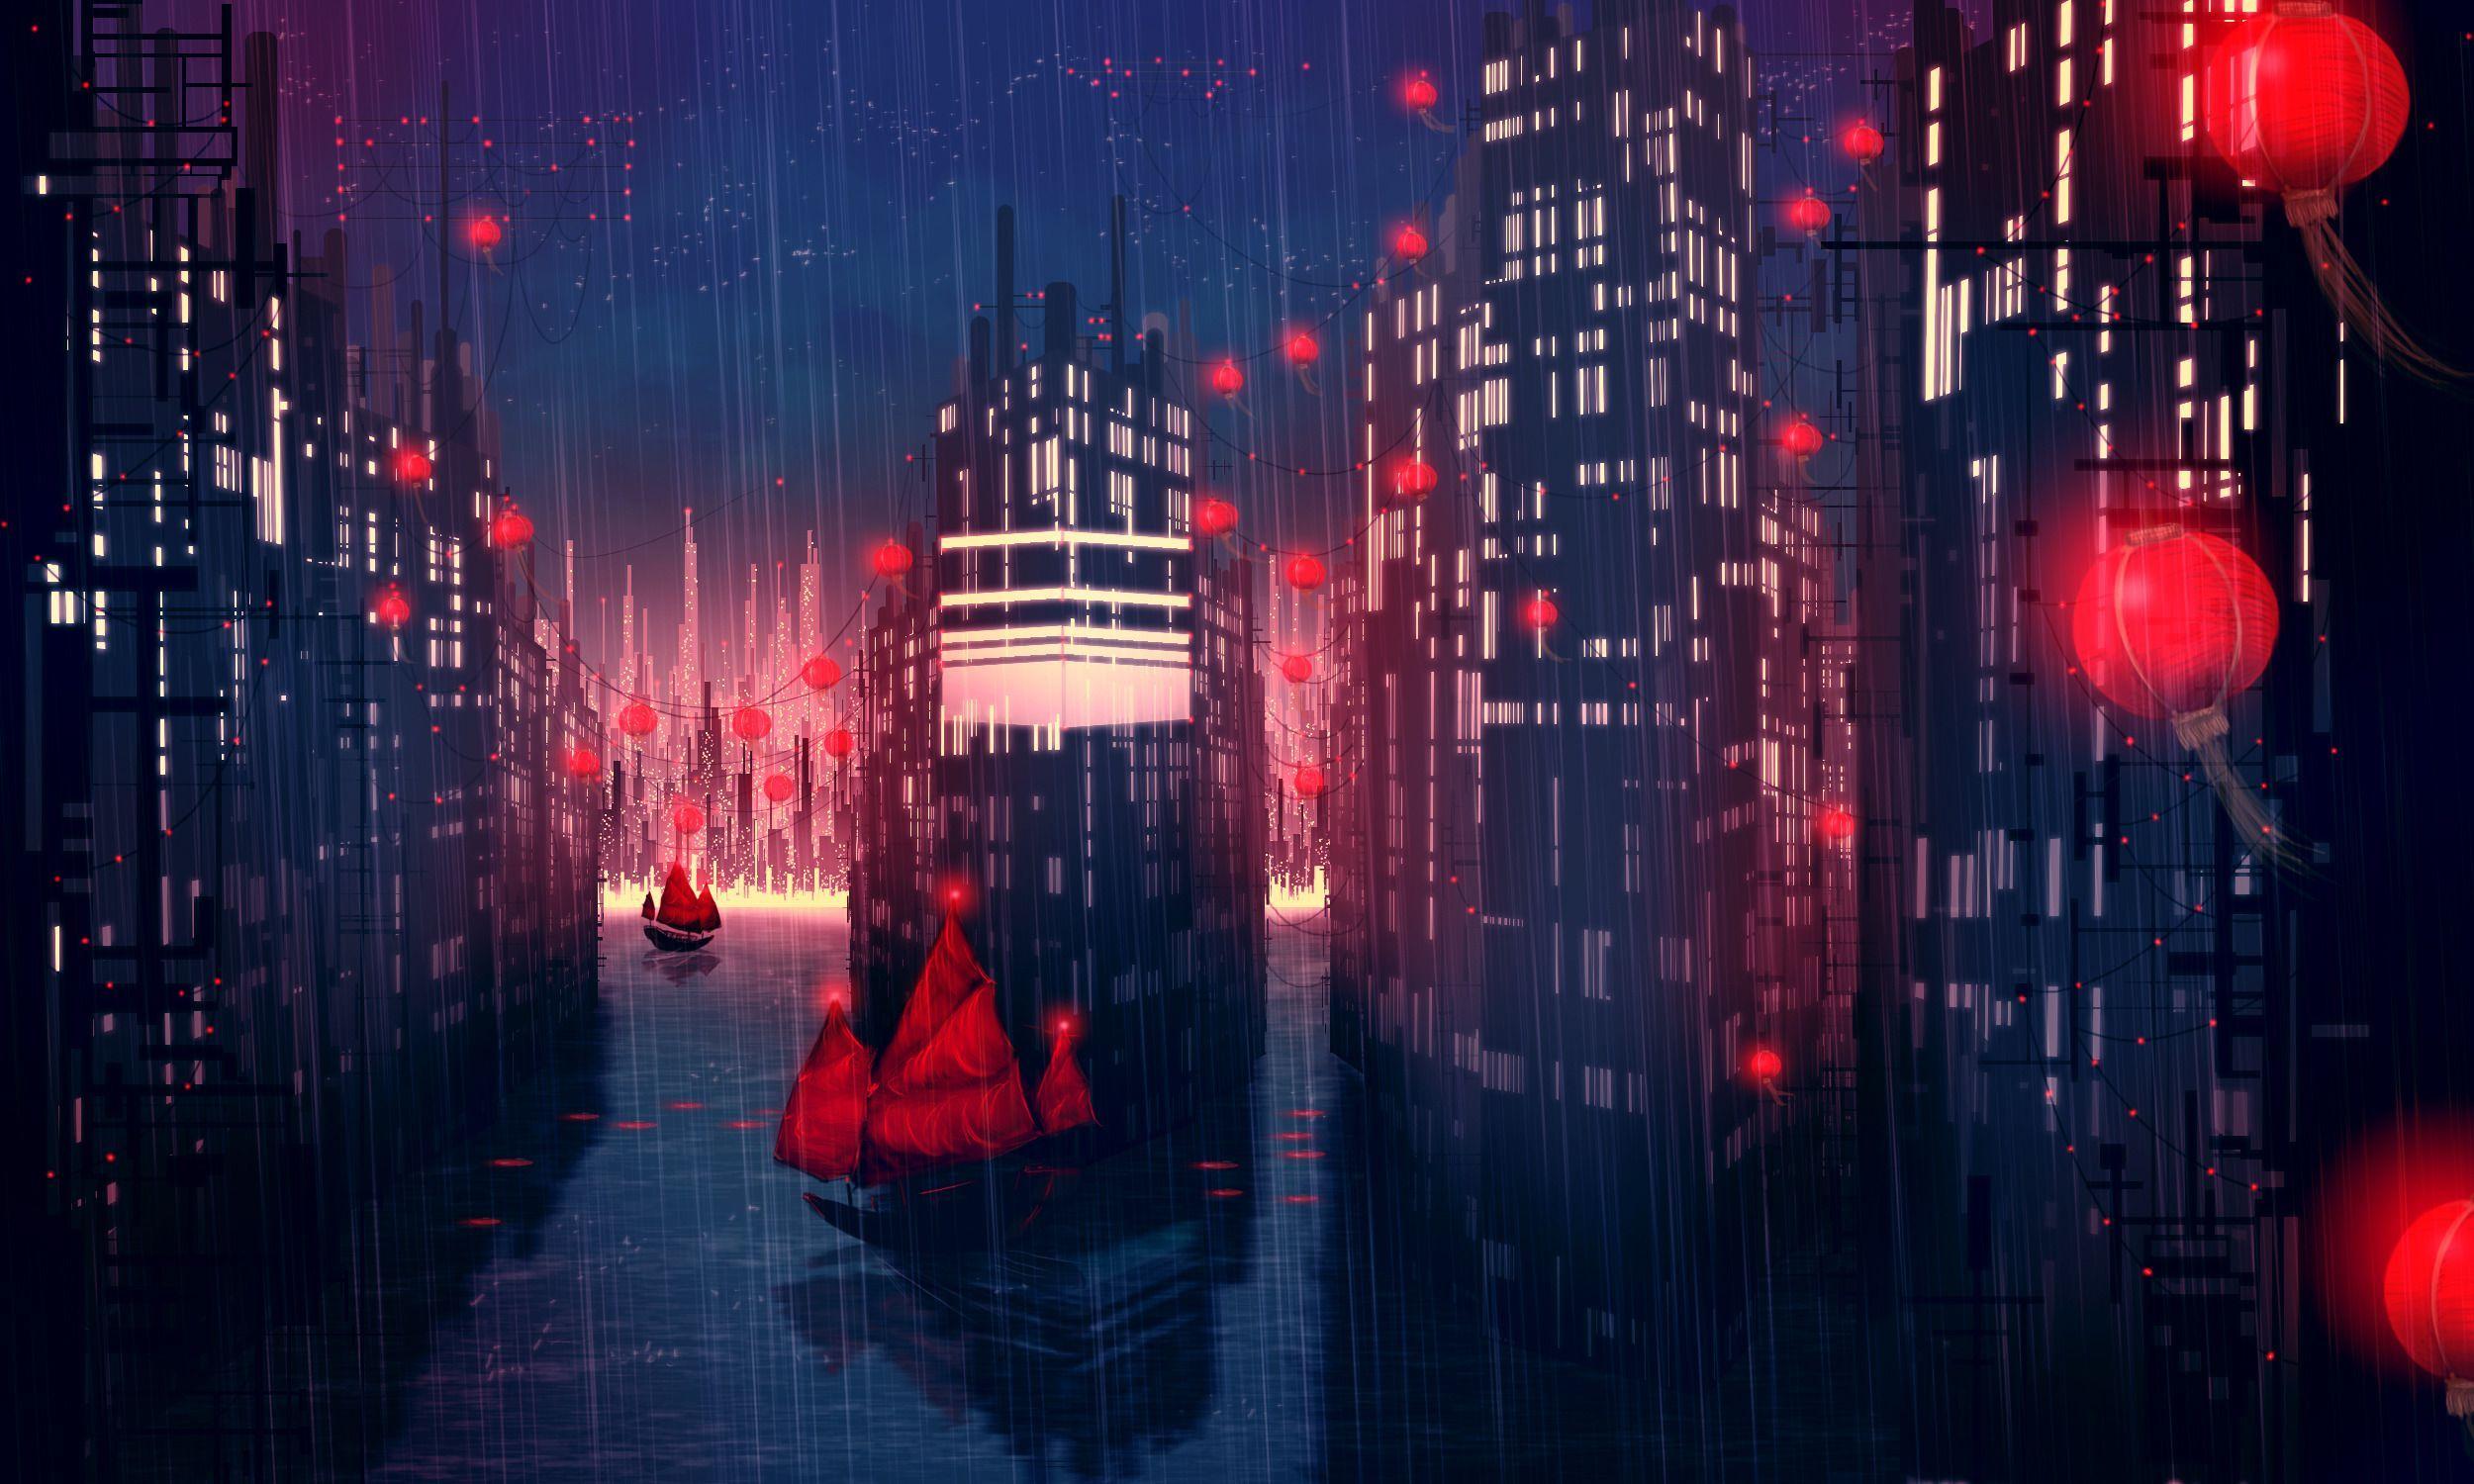 Anime Rain Scenery Wallpaper Free Anime Rain Scenery Background